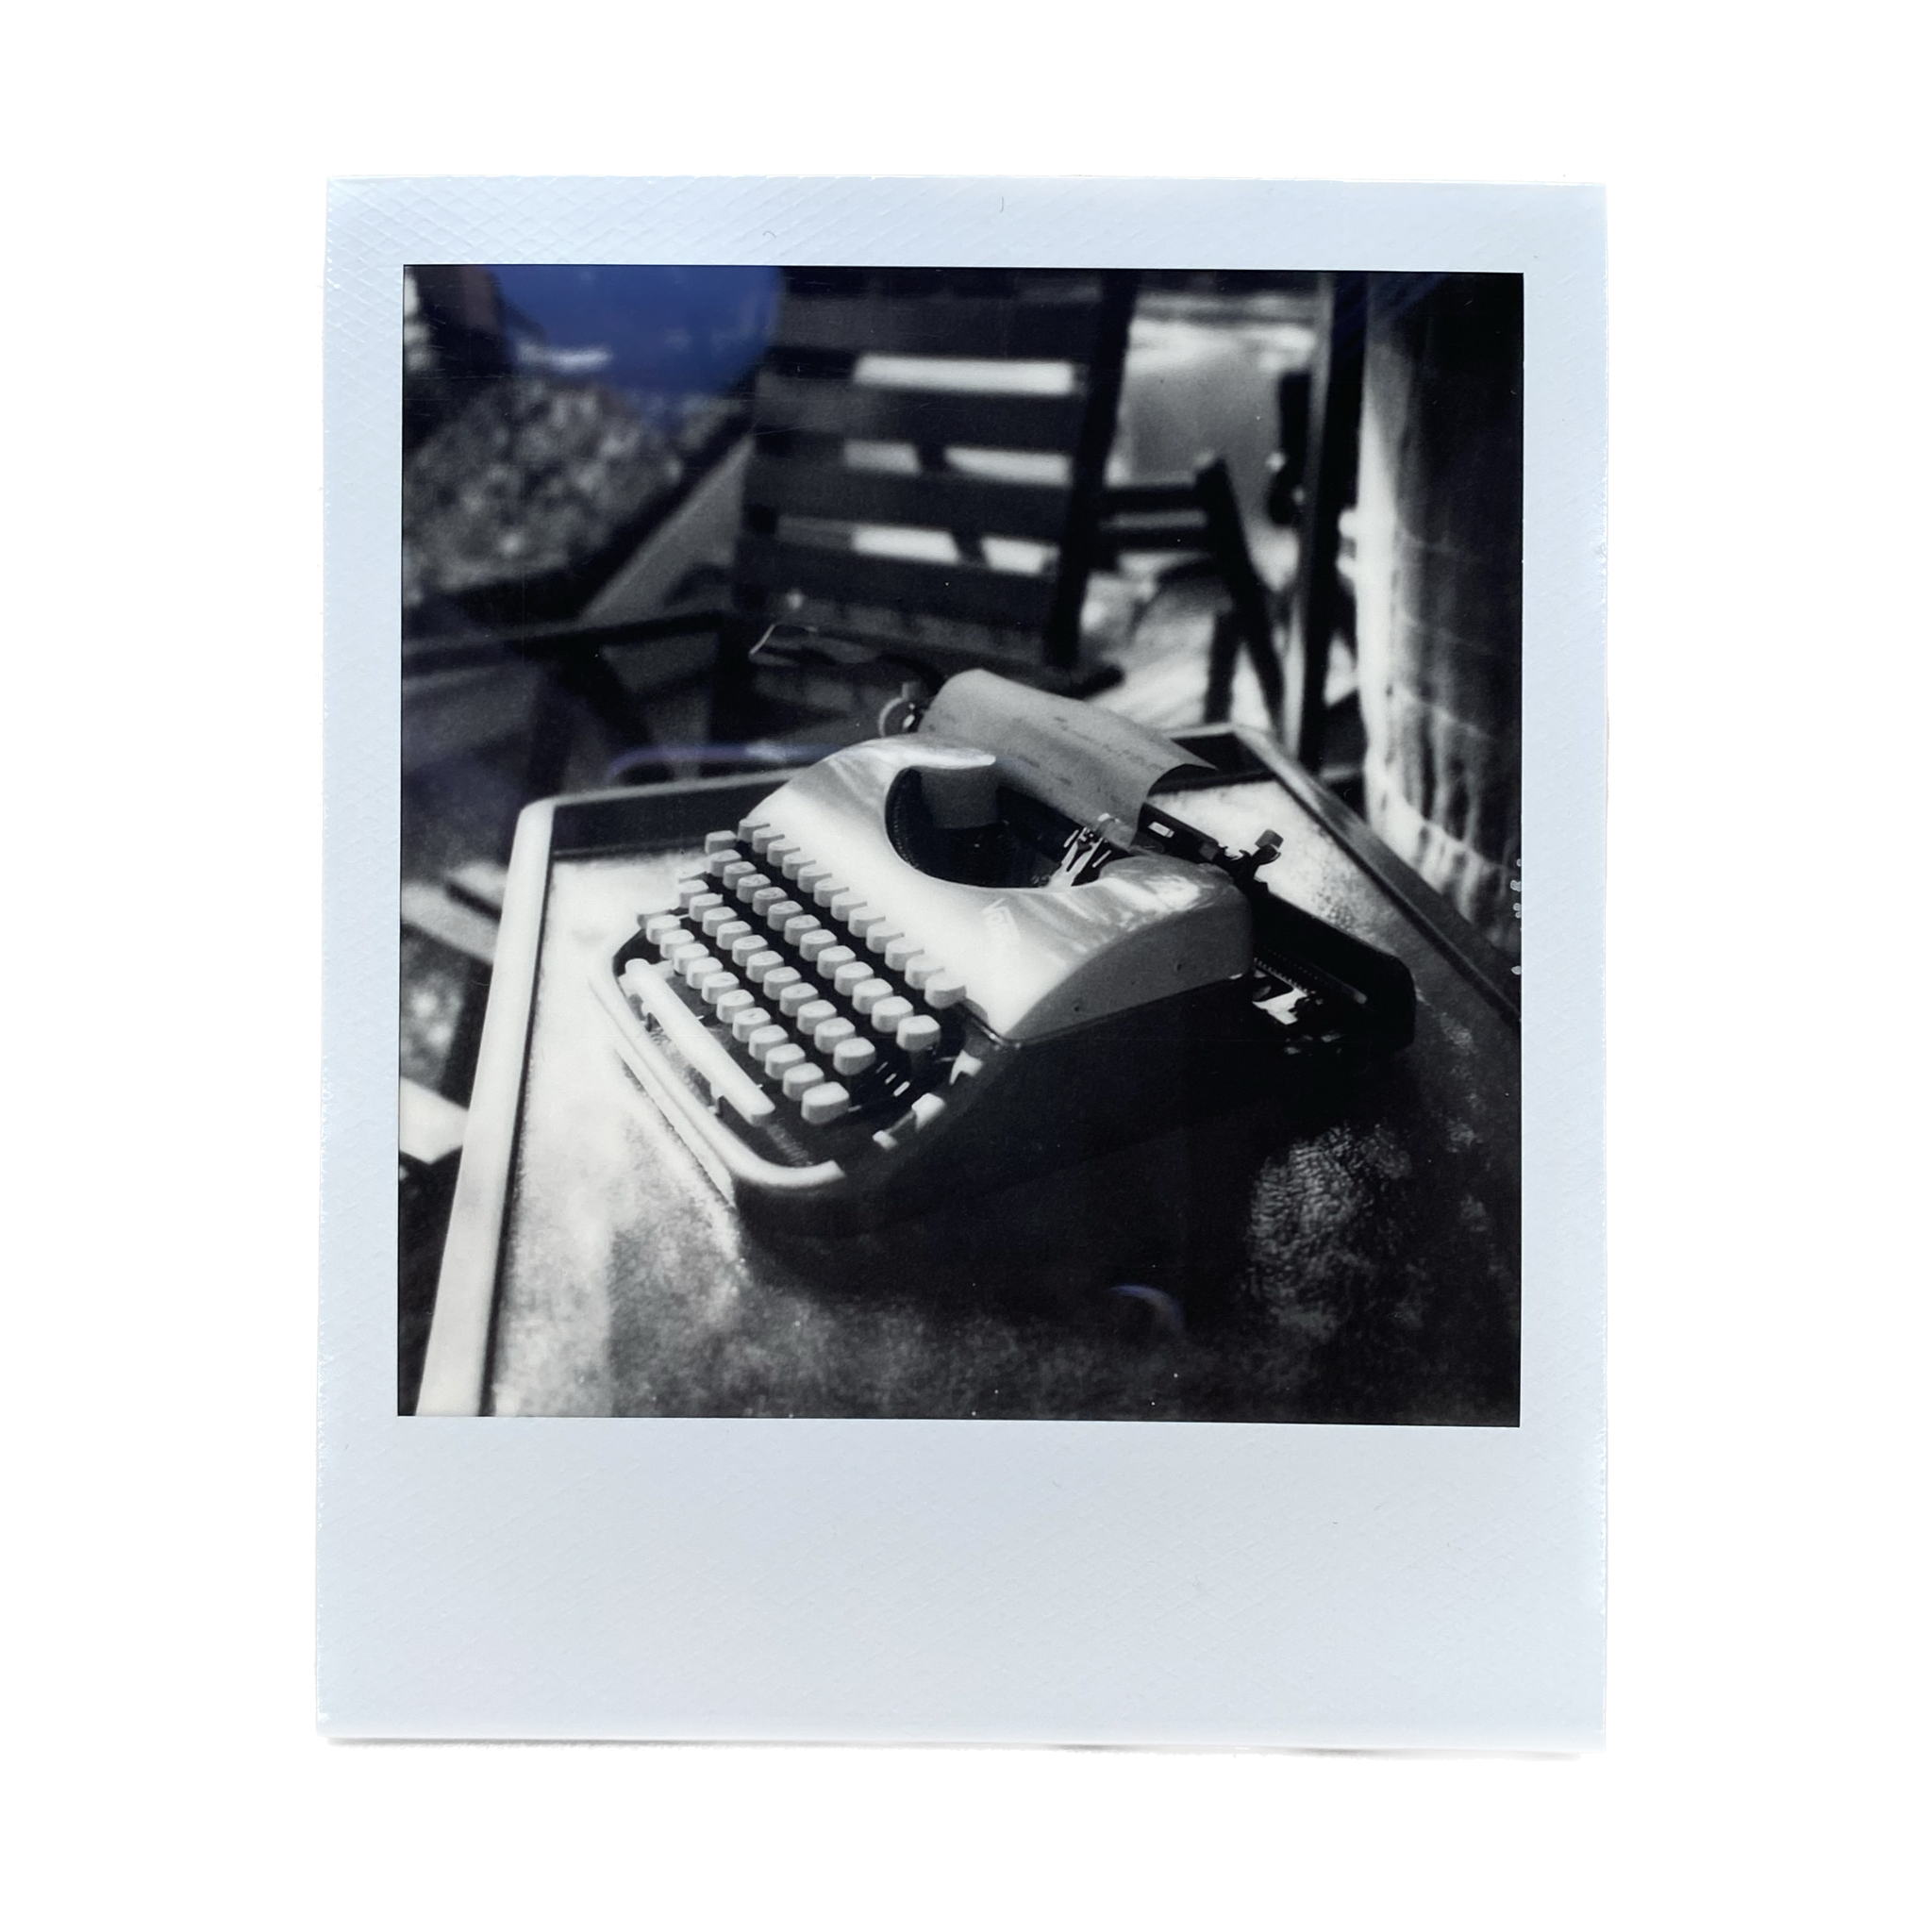 Polaroid SX-70 land camera + polaroid flash used instant camera